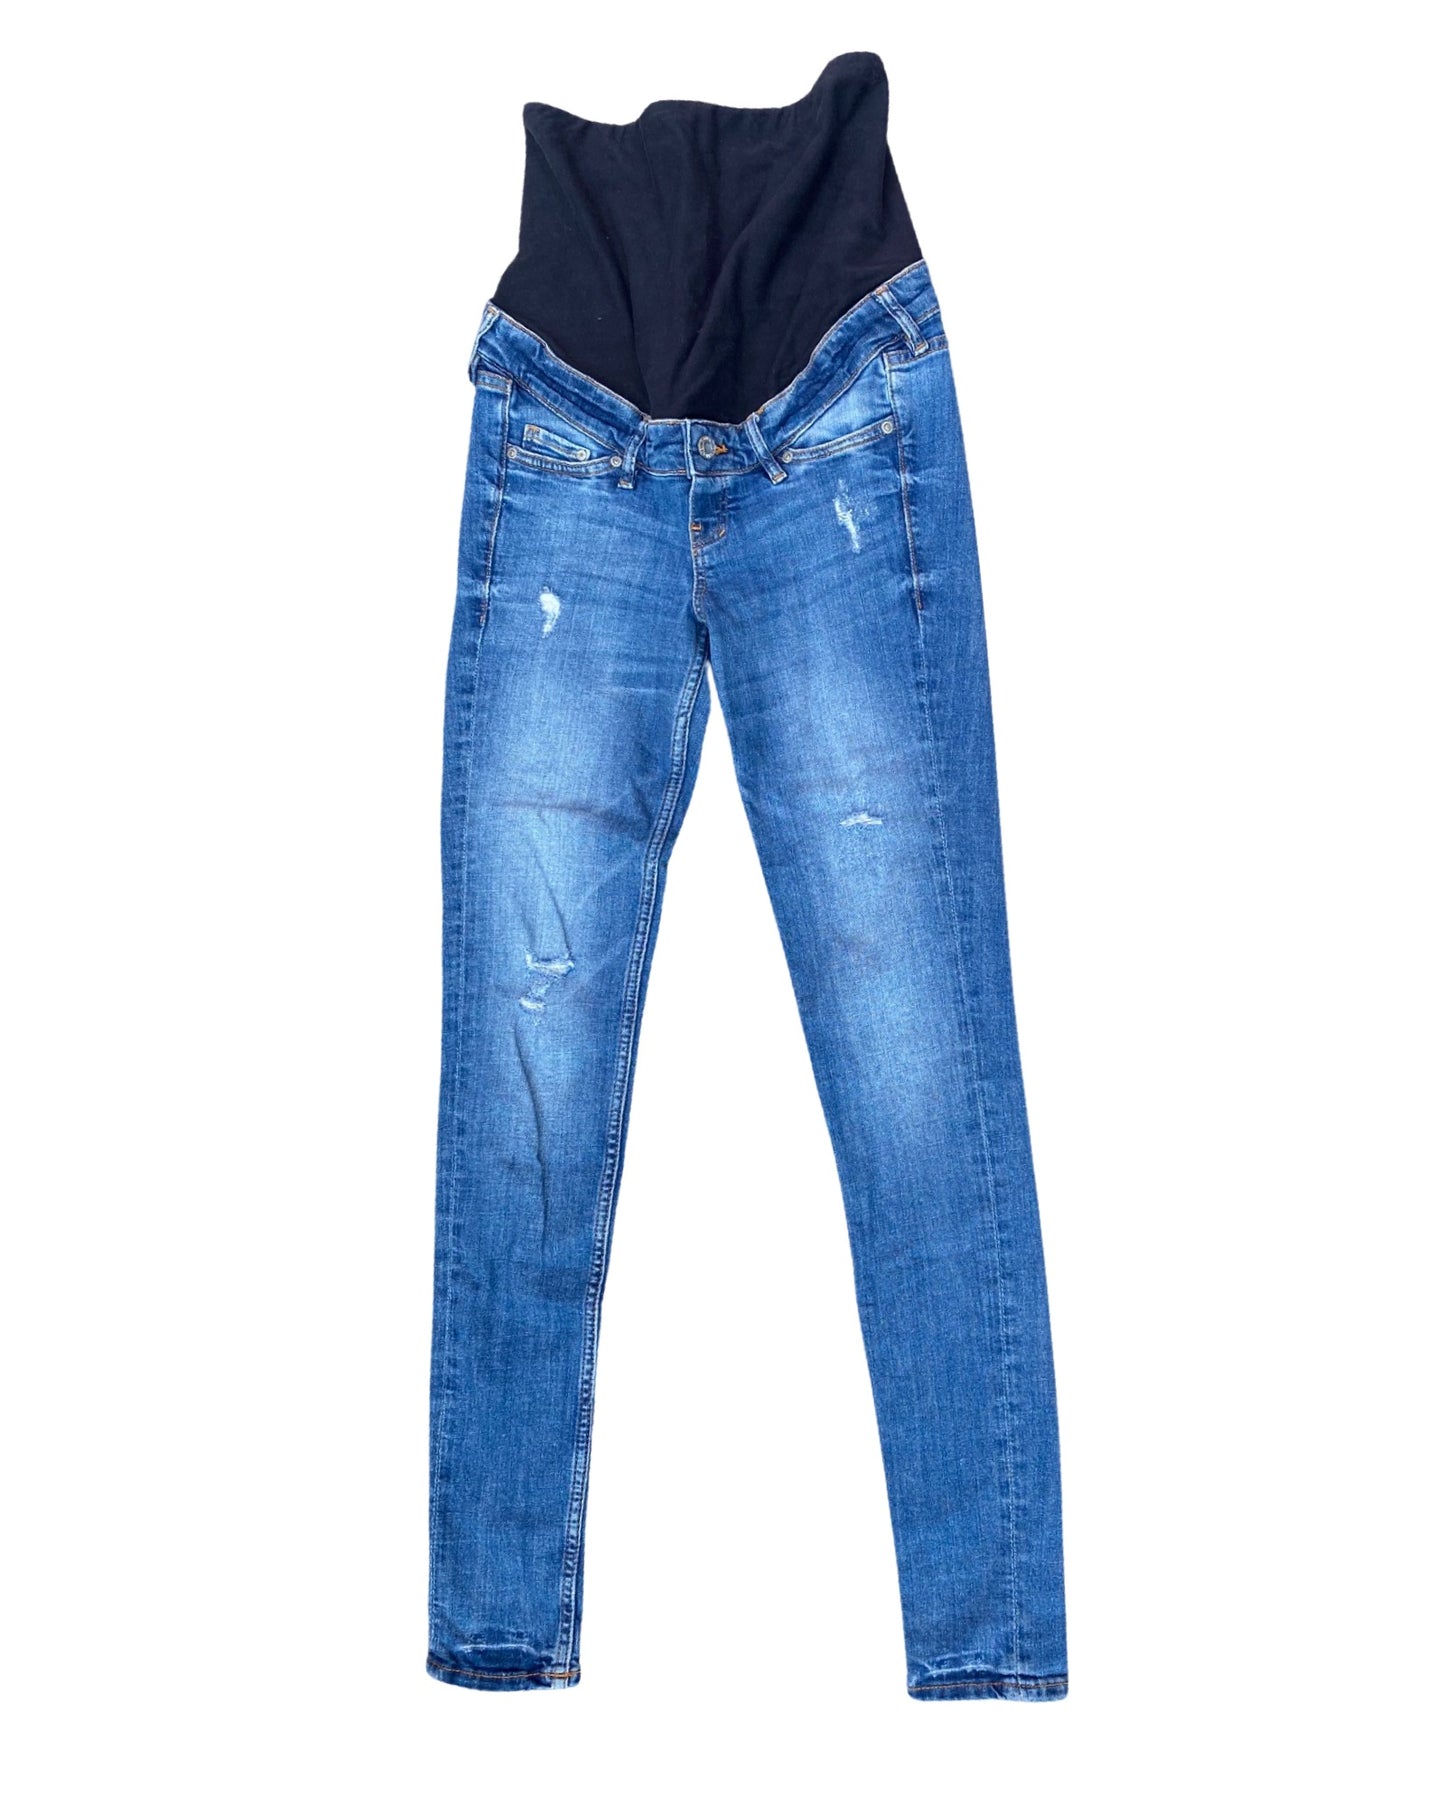 H&M Mama skinny high rib mid wash jean (size 8)